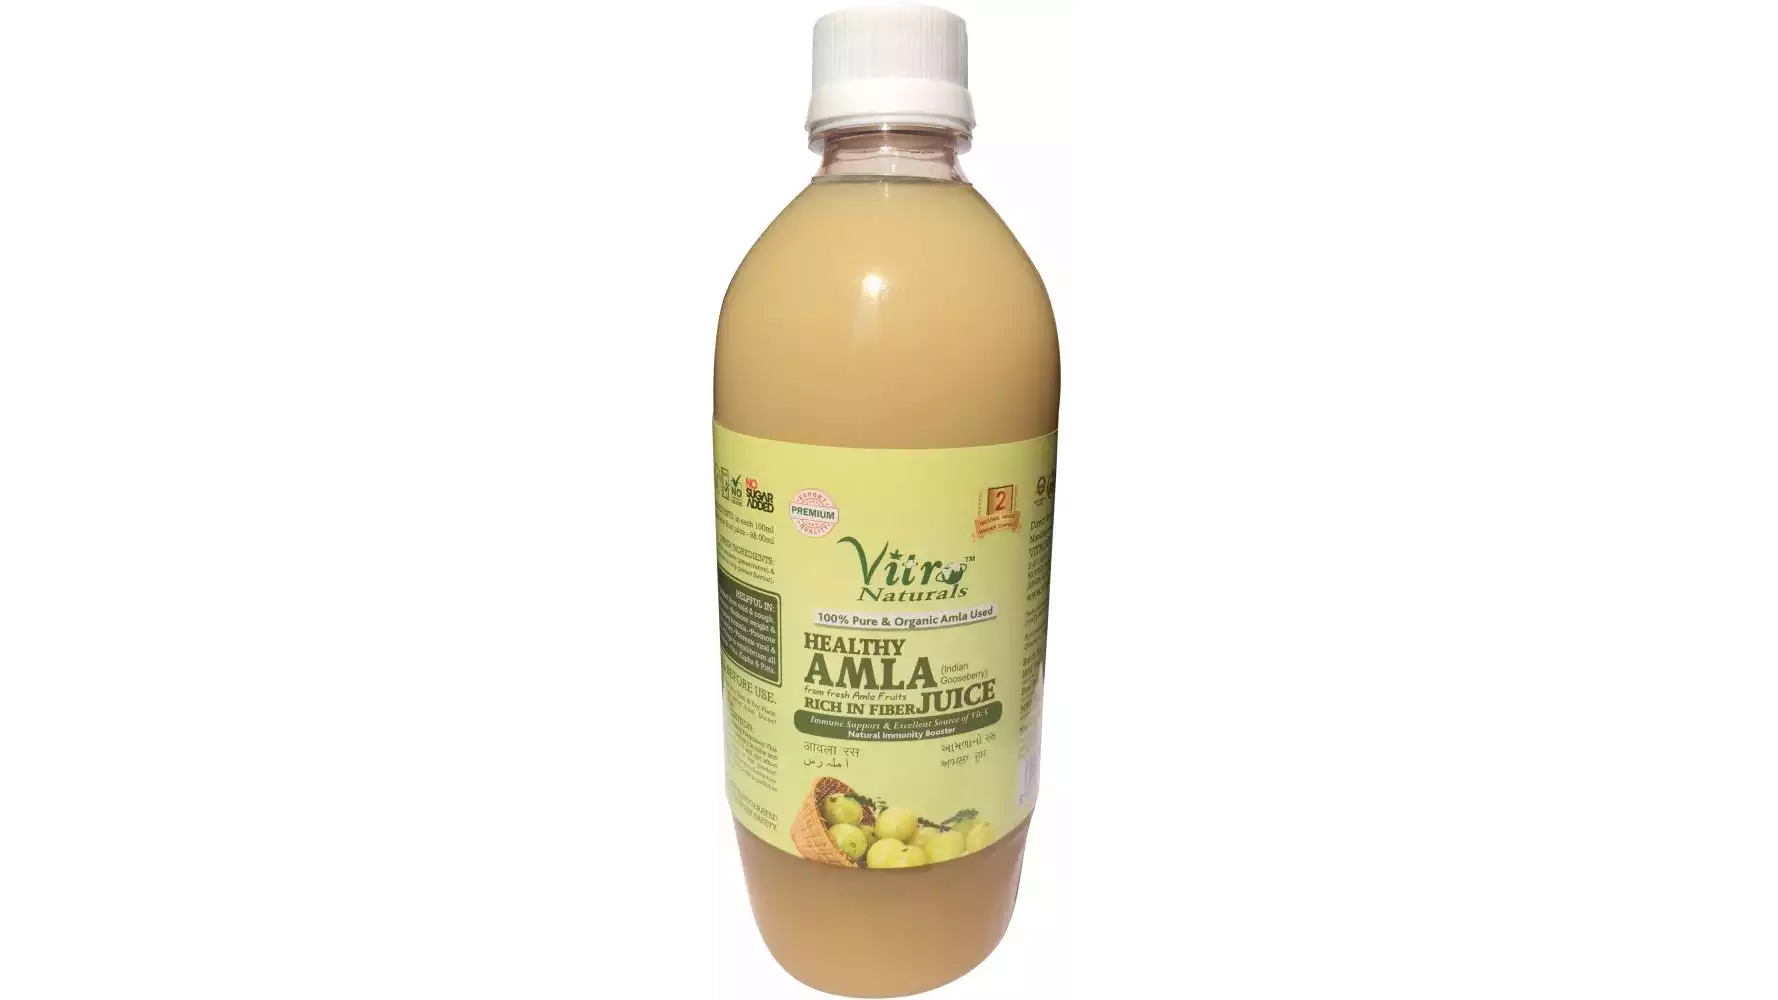 Vitro Naturals Healthy Amla Juice (1liter)